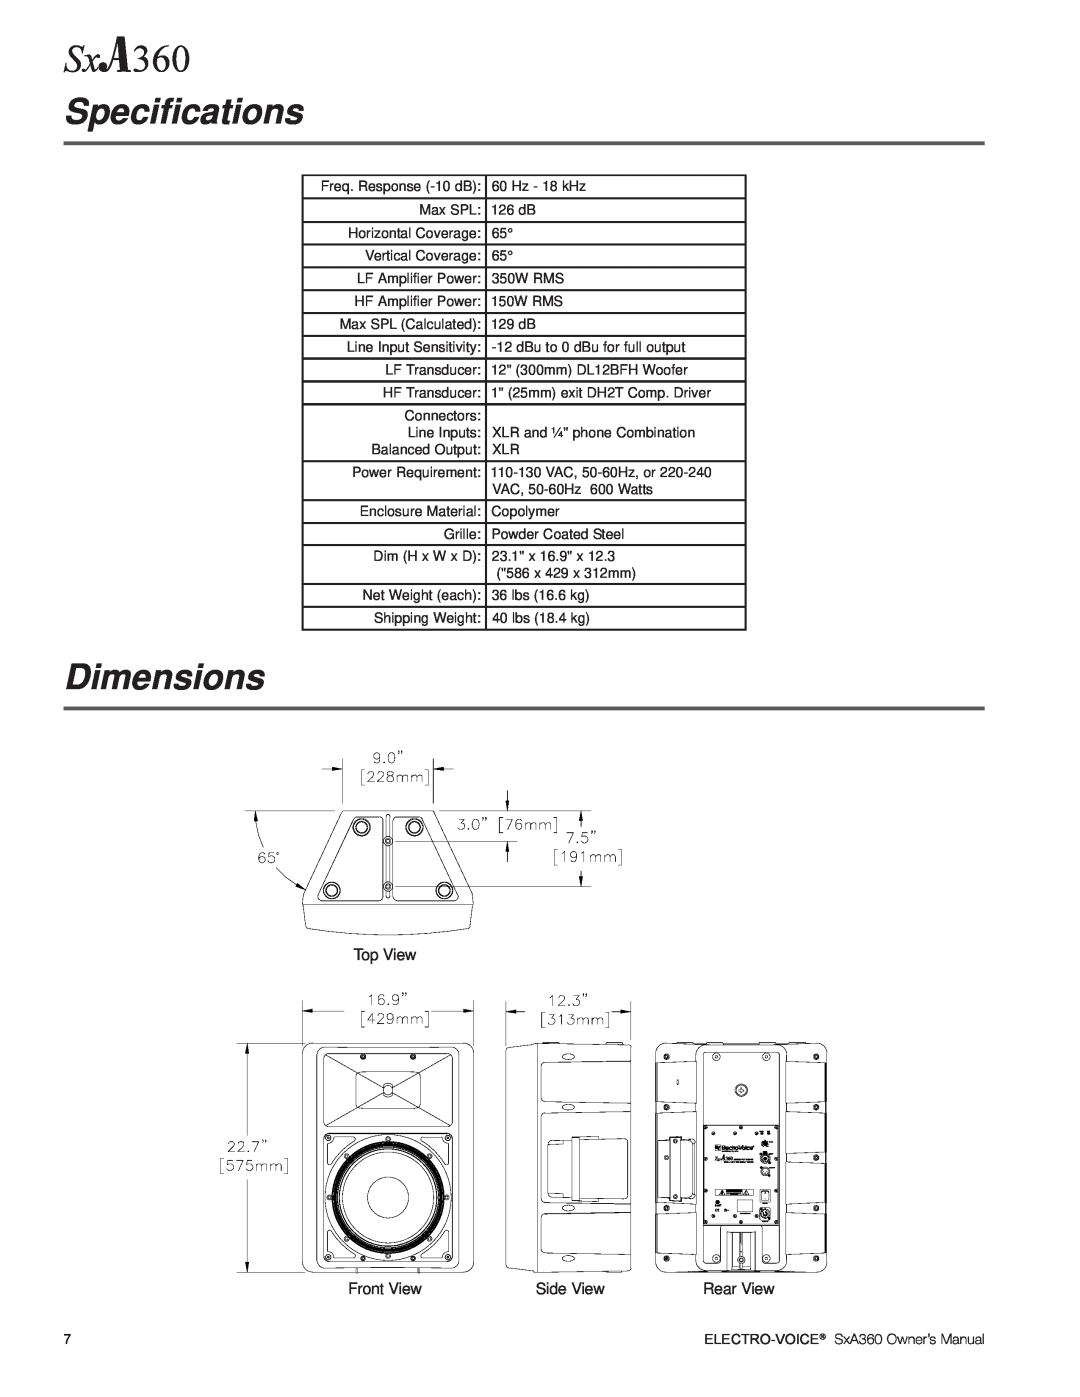 Electro-Voice SxA360 manual Specifications, Dimensions, Top View, Front View, Side View, Electro-Voice 